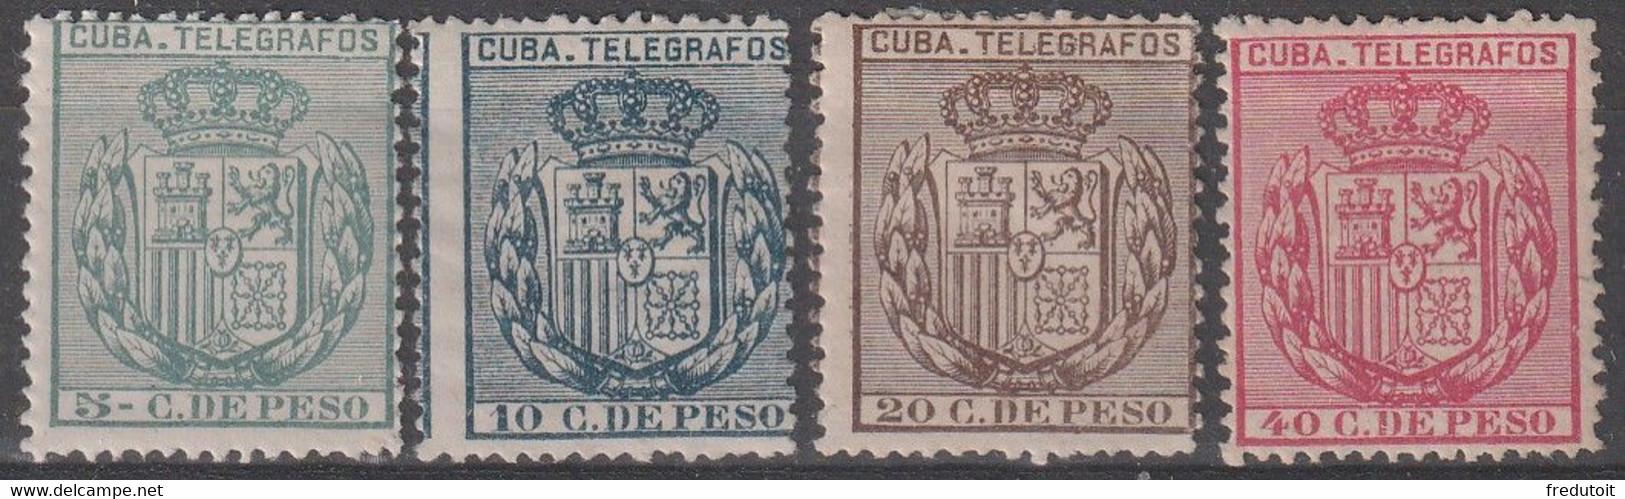 CUBA - TELEGRAPHE - N°78/81 * (1896) - Telegrafo